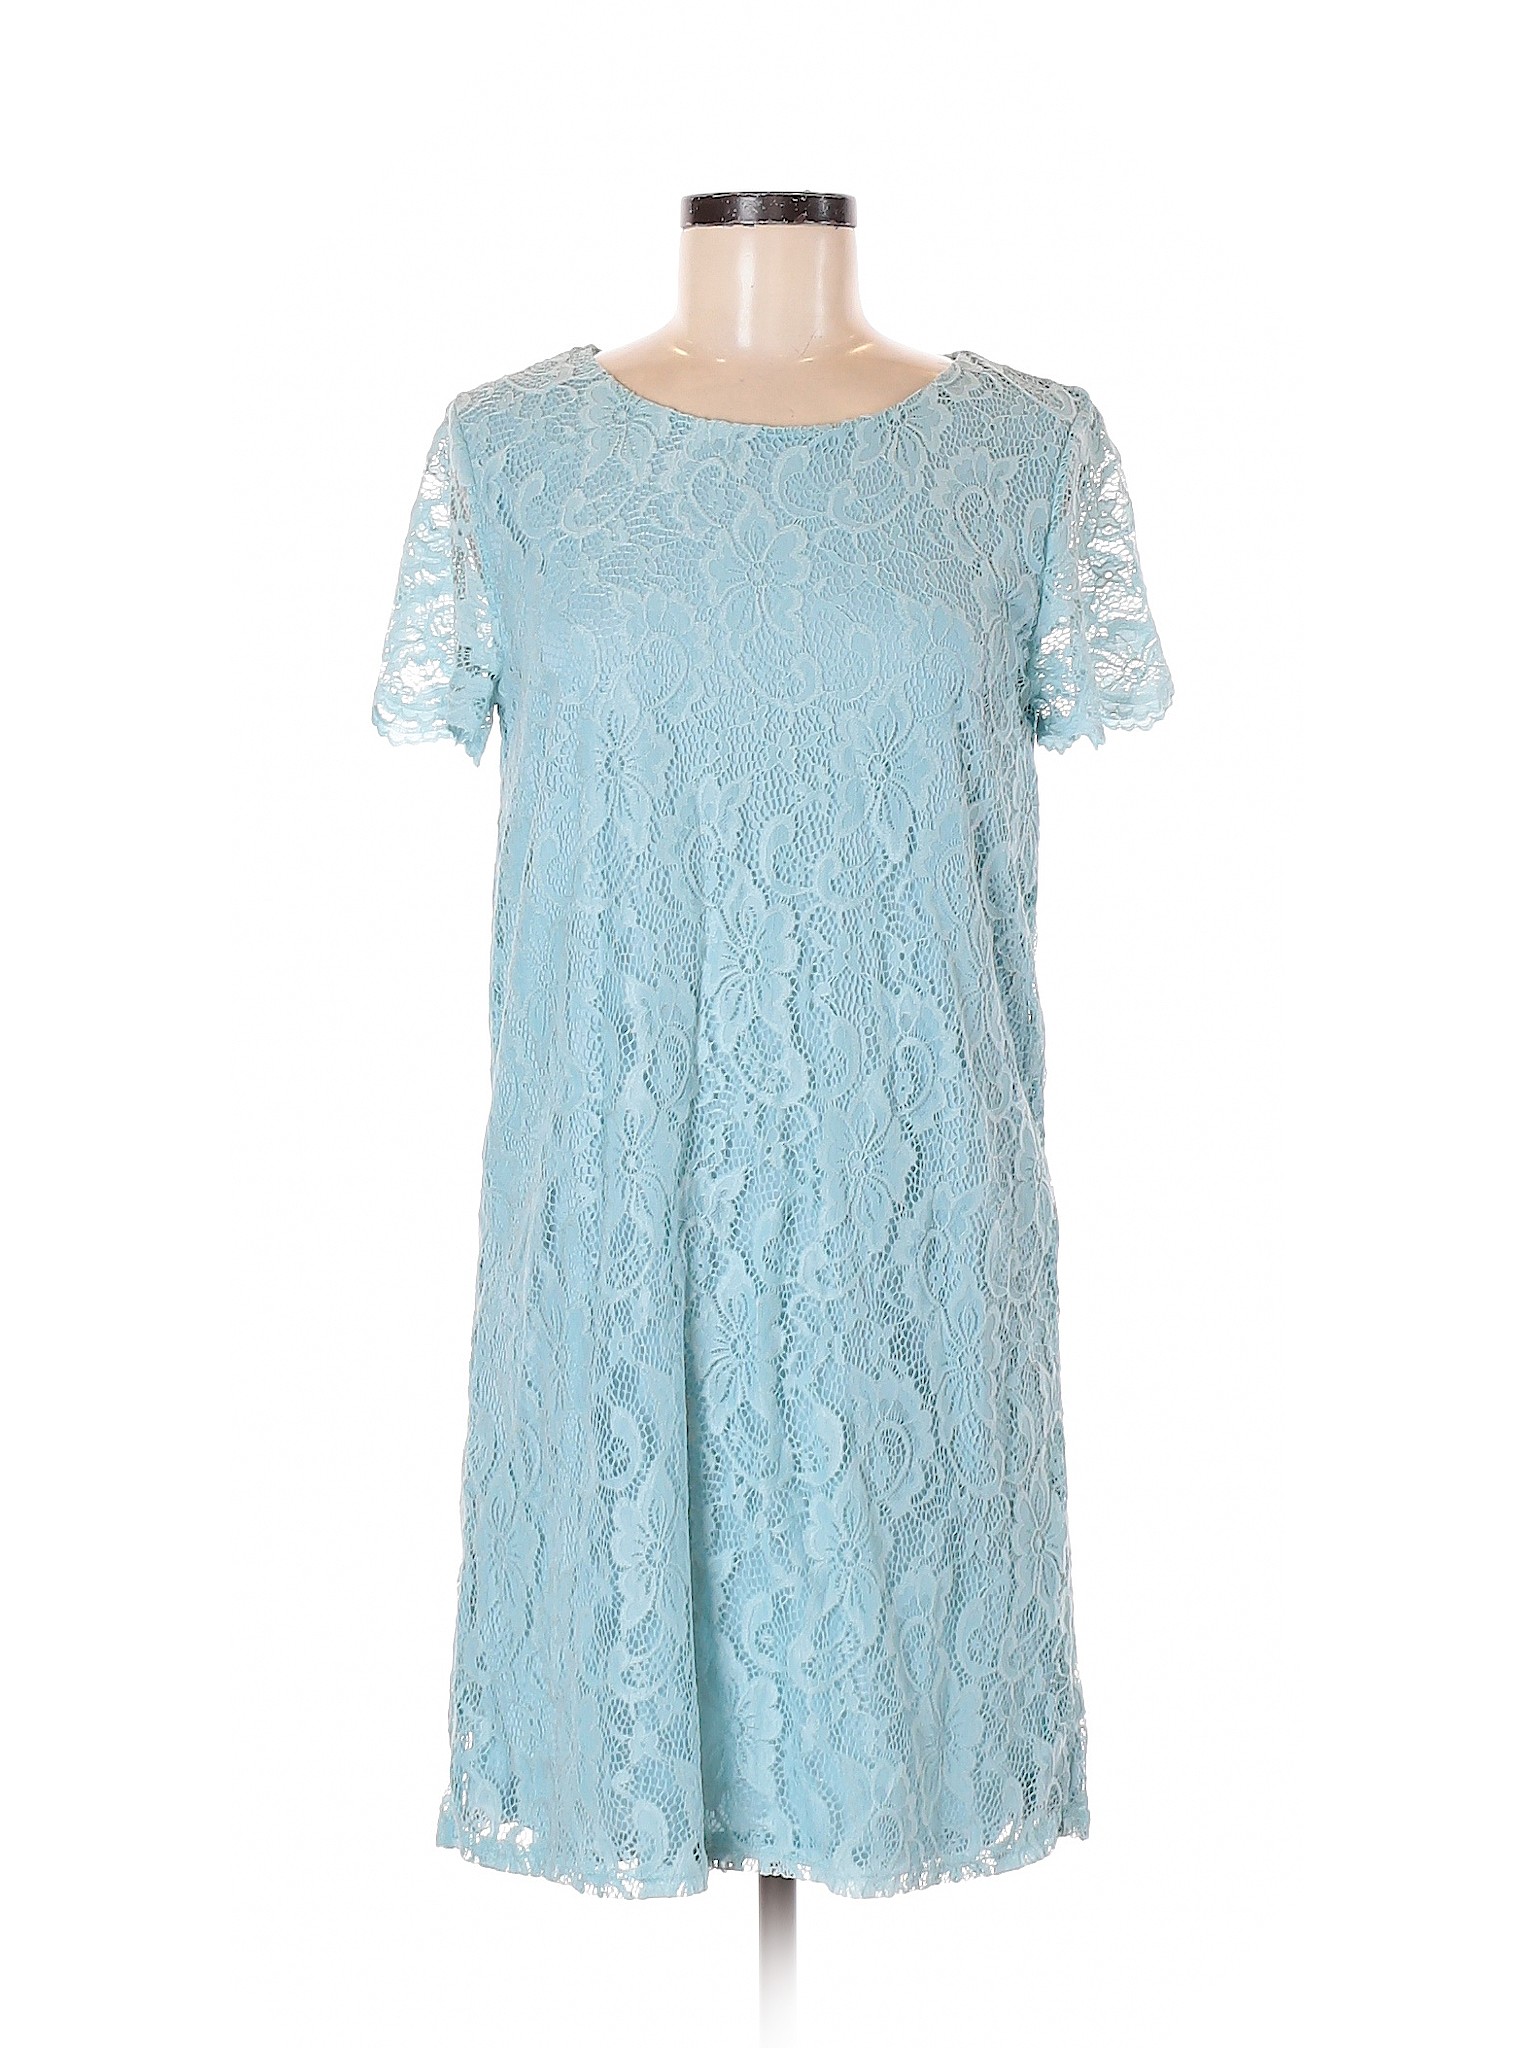 Juicy Couture Women Blue Cocktail Dress M | eBay